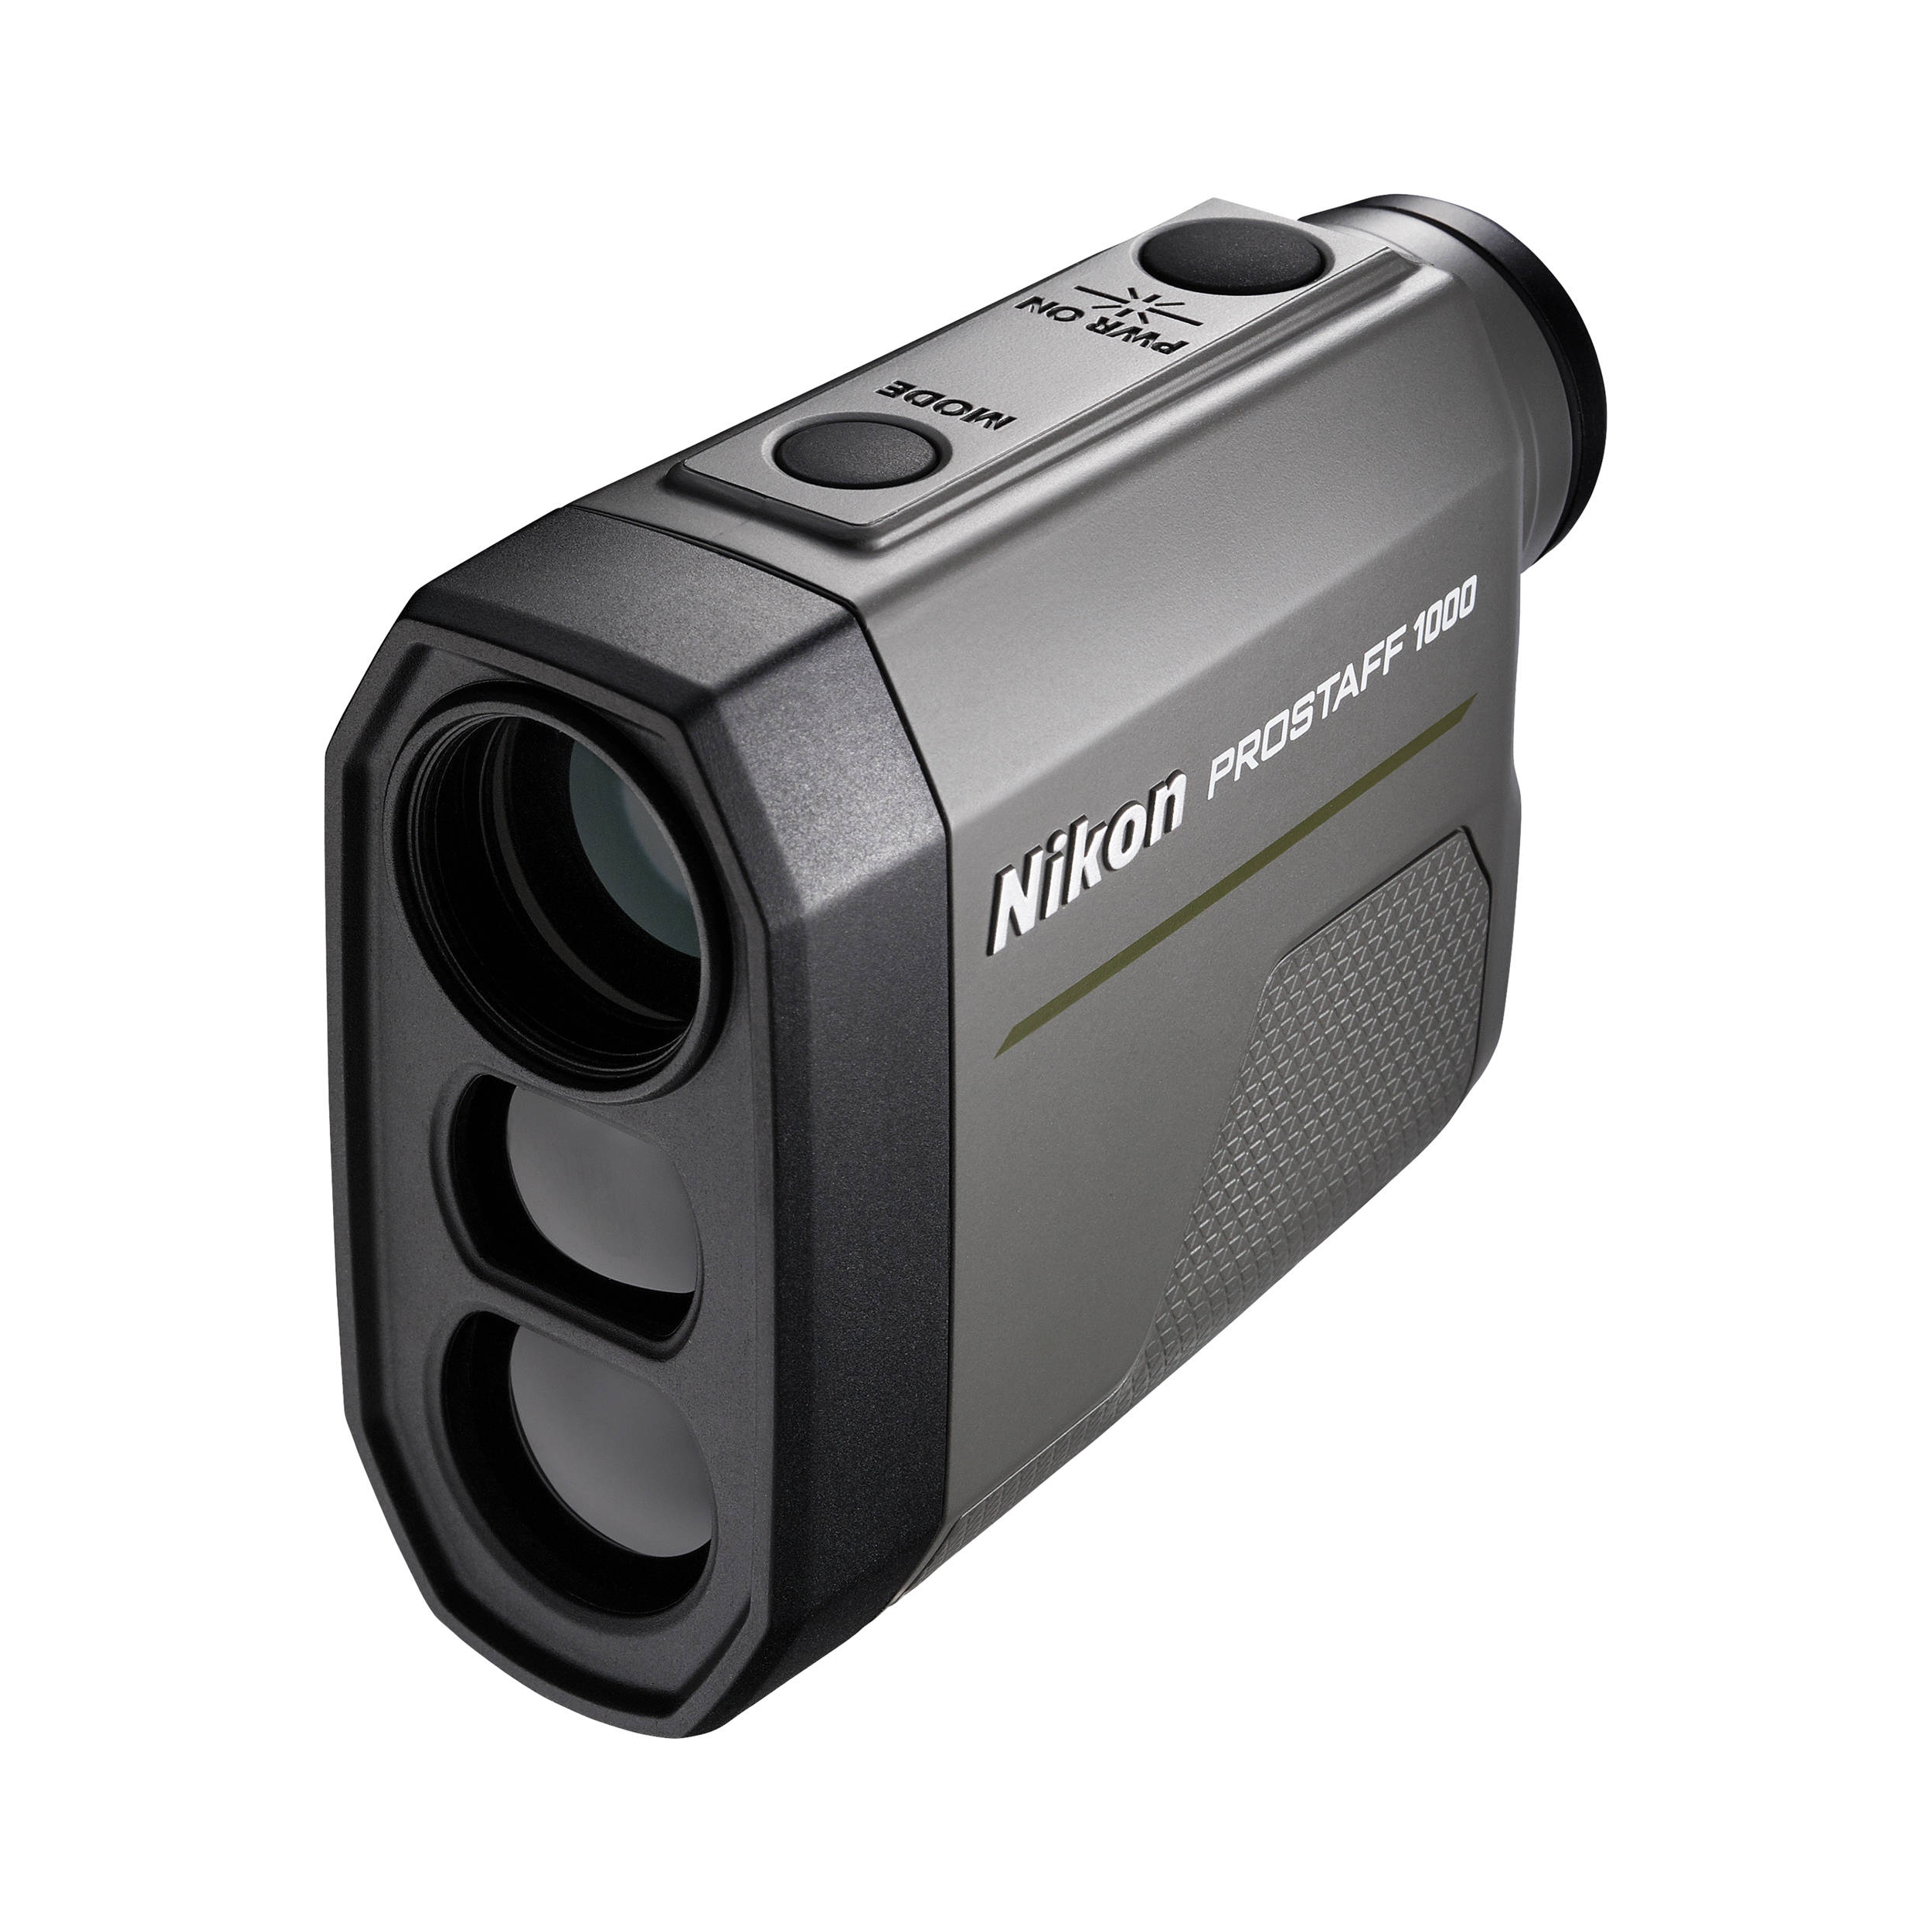 Nikon Prostaff 1000 Golf Rangefinder - 6x20